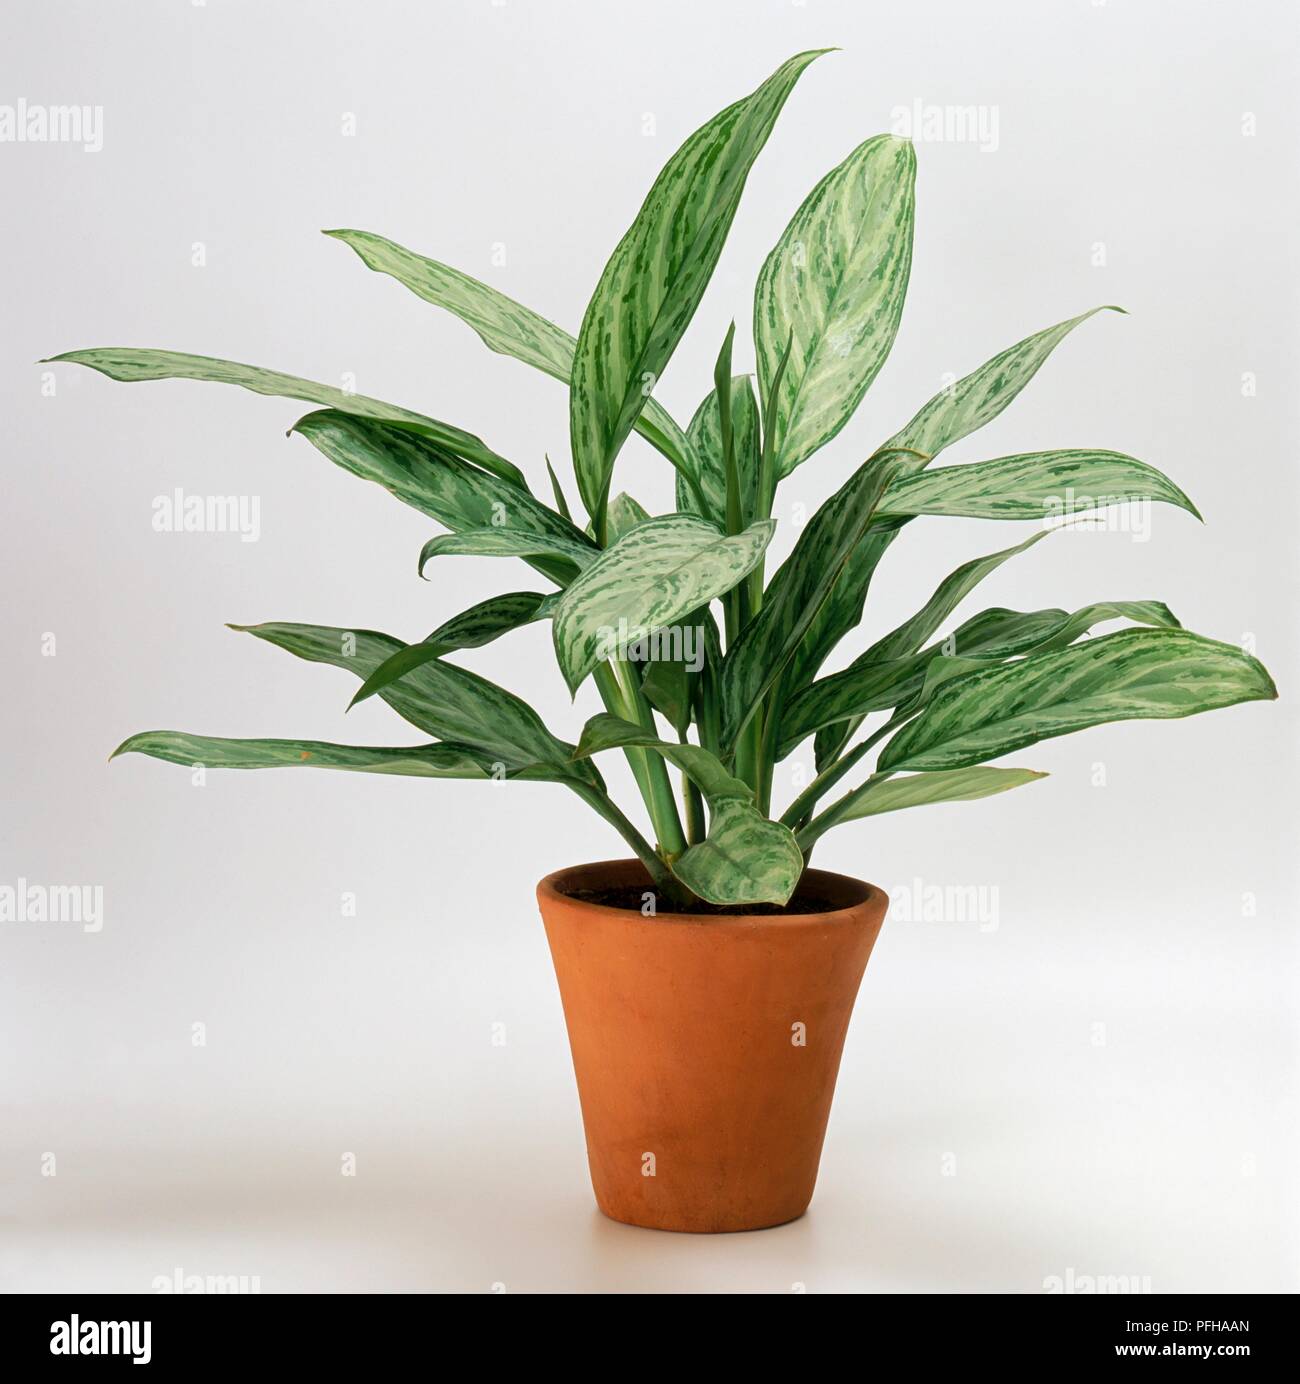 Aglaonema 'Lilian' (Cinese evergreen) nel vaso in terracotta Foto Stock